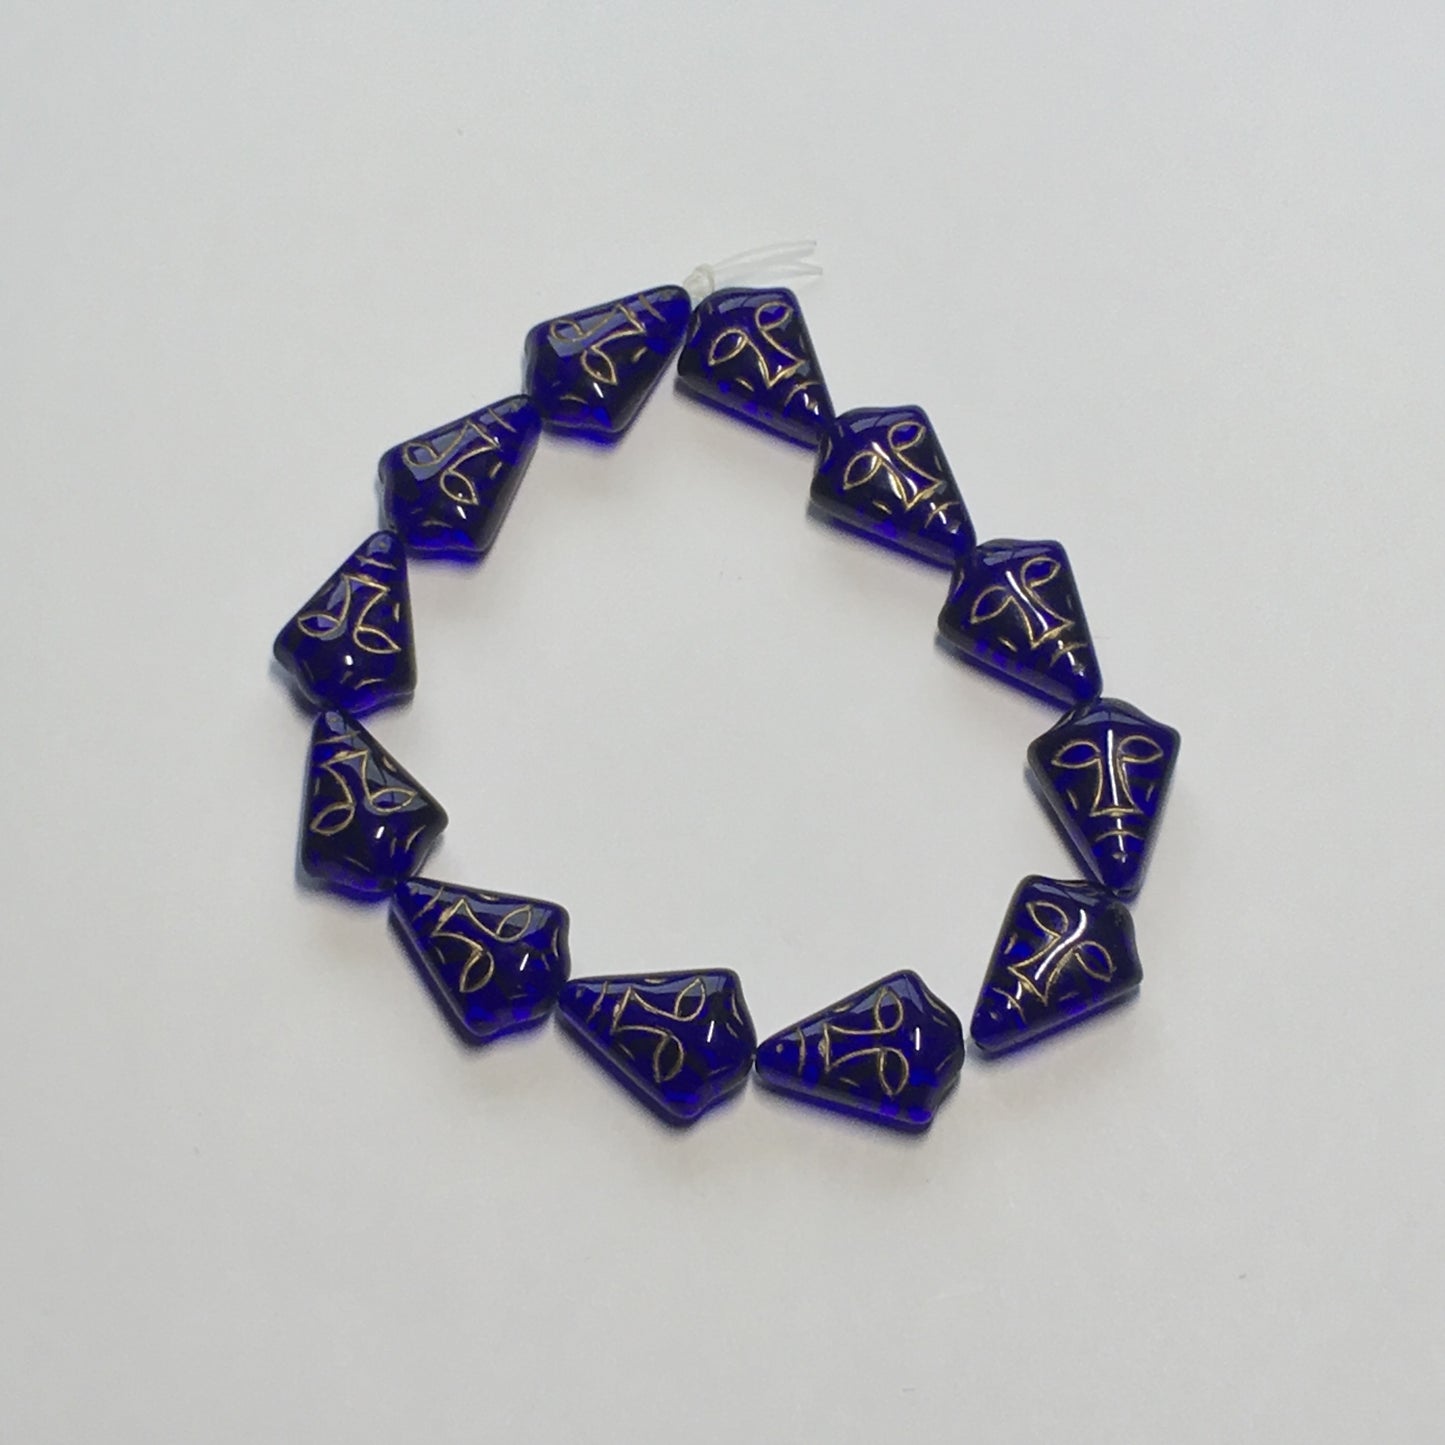 Transparent Cobalt Blue Glass Face Beads with Gold Inlay, 22 x 17 mm, 12 Beads